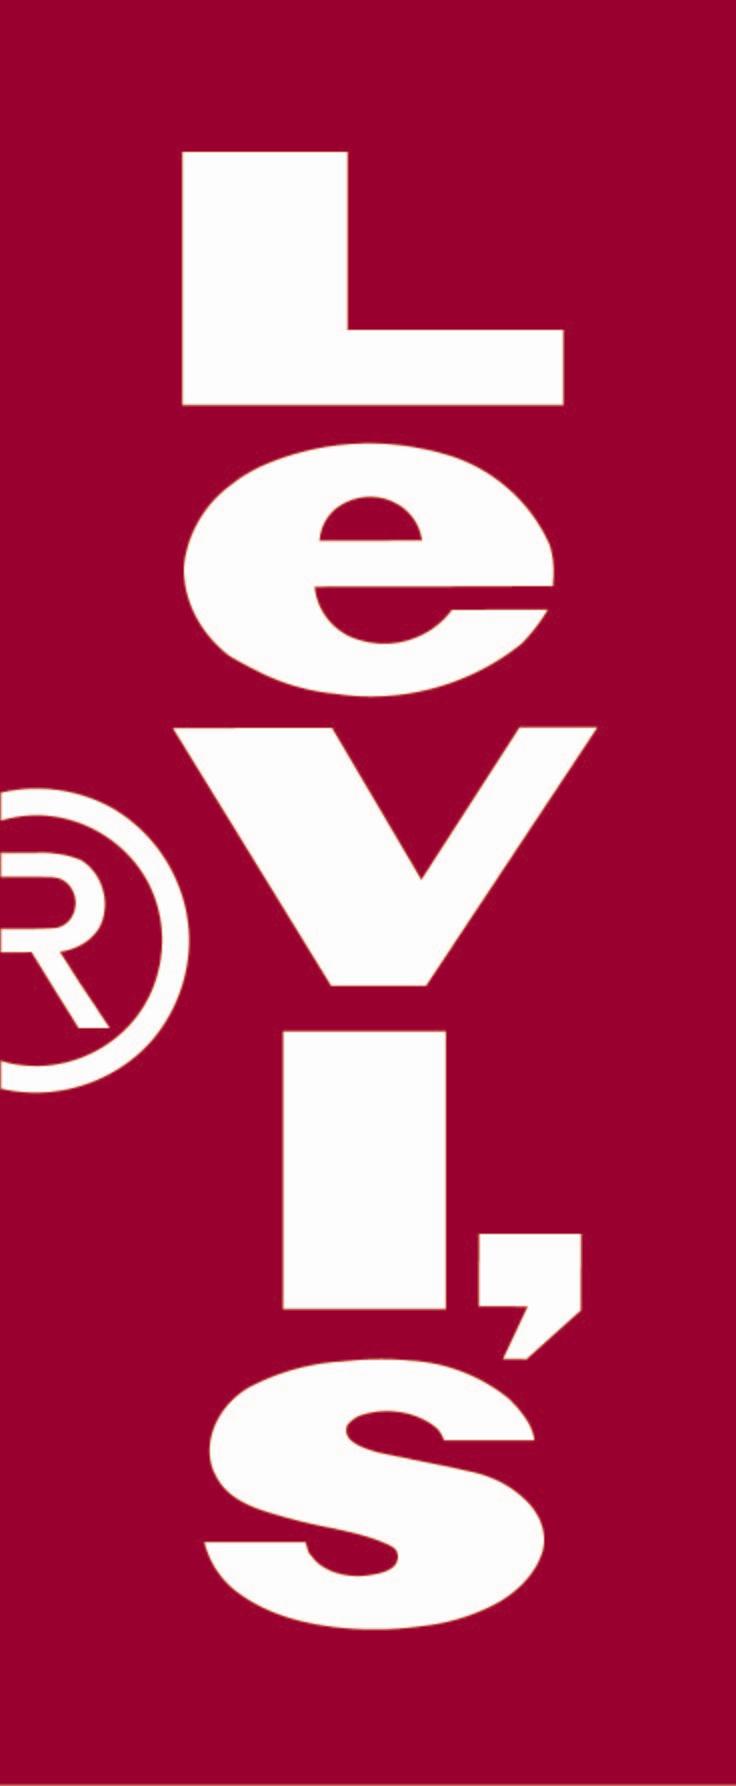 levis logo